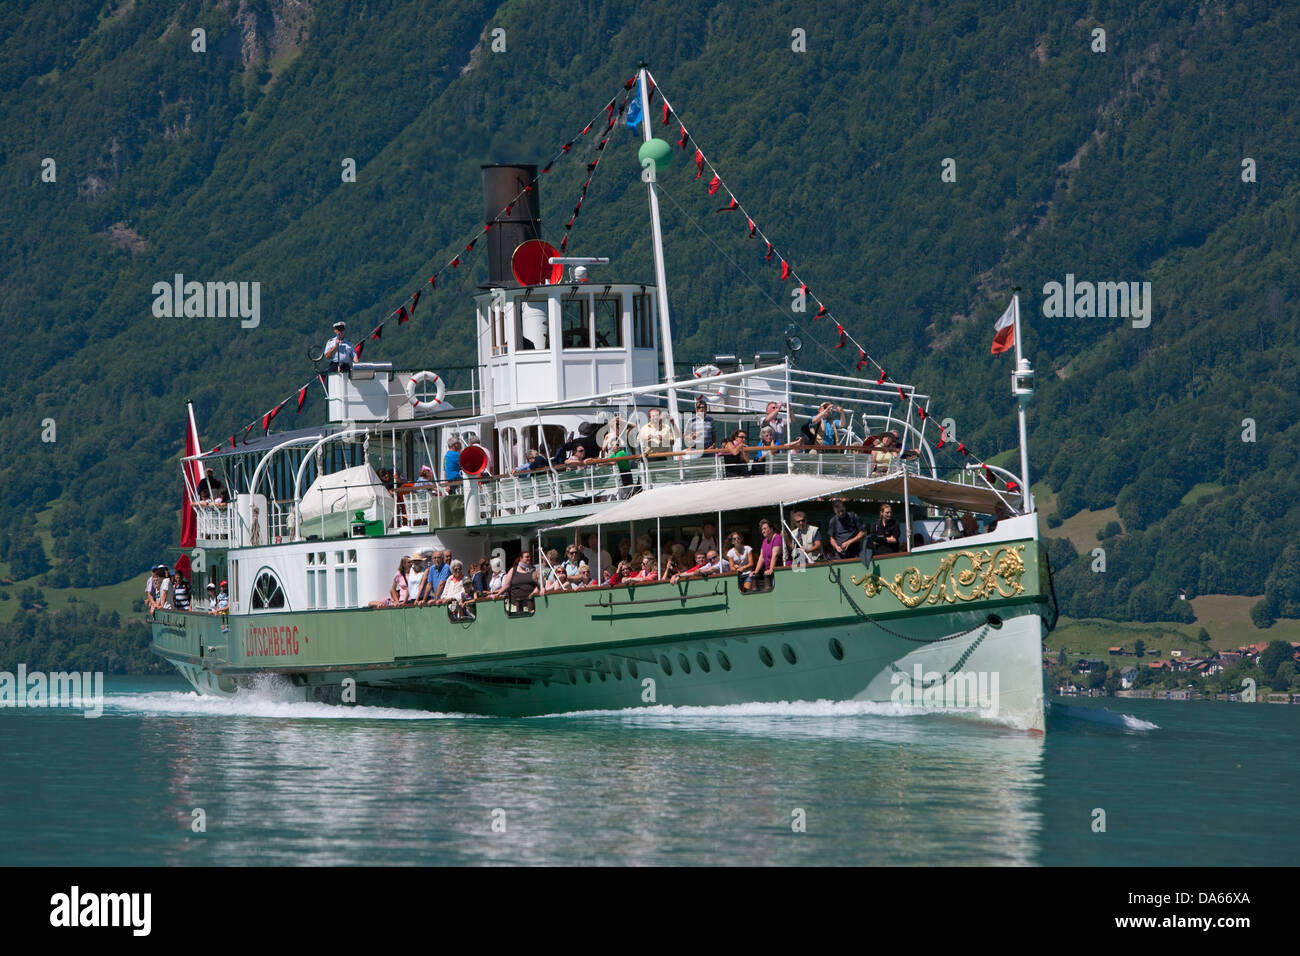 Steamboat, paddle steamer, Lötschberg, Brienzersee, ship, boat, ships, boats, canton, Bern, Bernese Oberland, lake Brienz, Switz Stock Photo